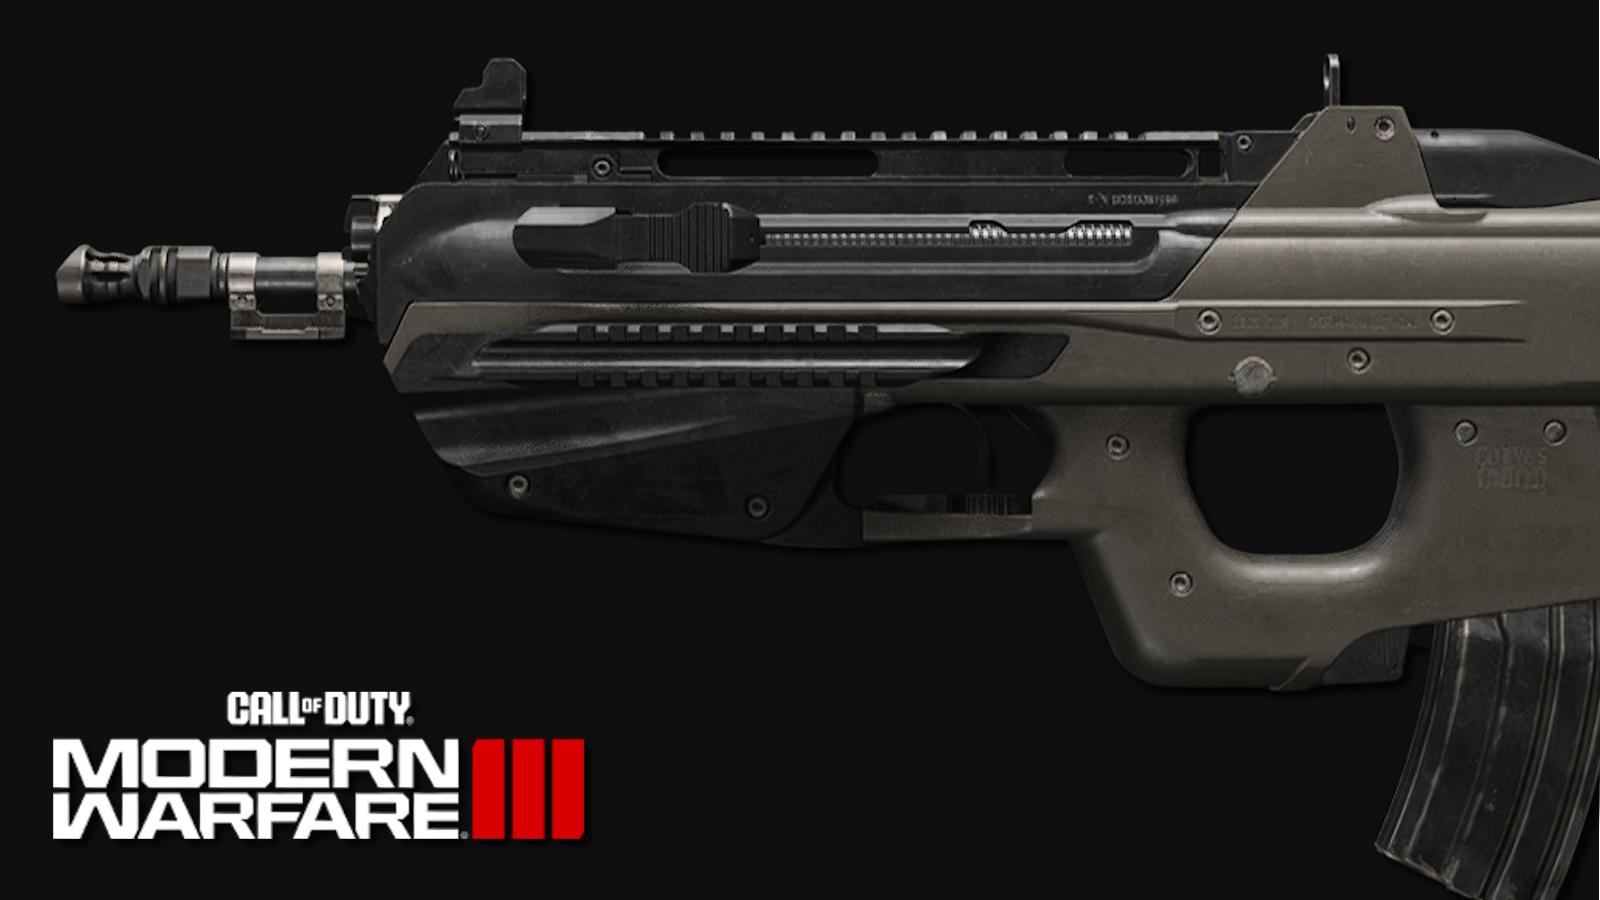 The BP50 assault rifle in Modern Warfare 3.